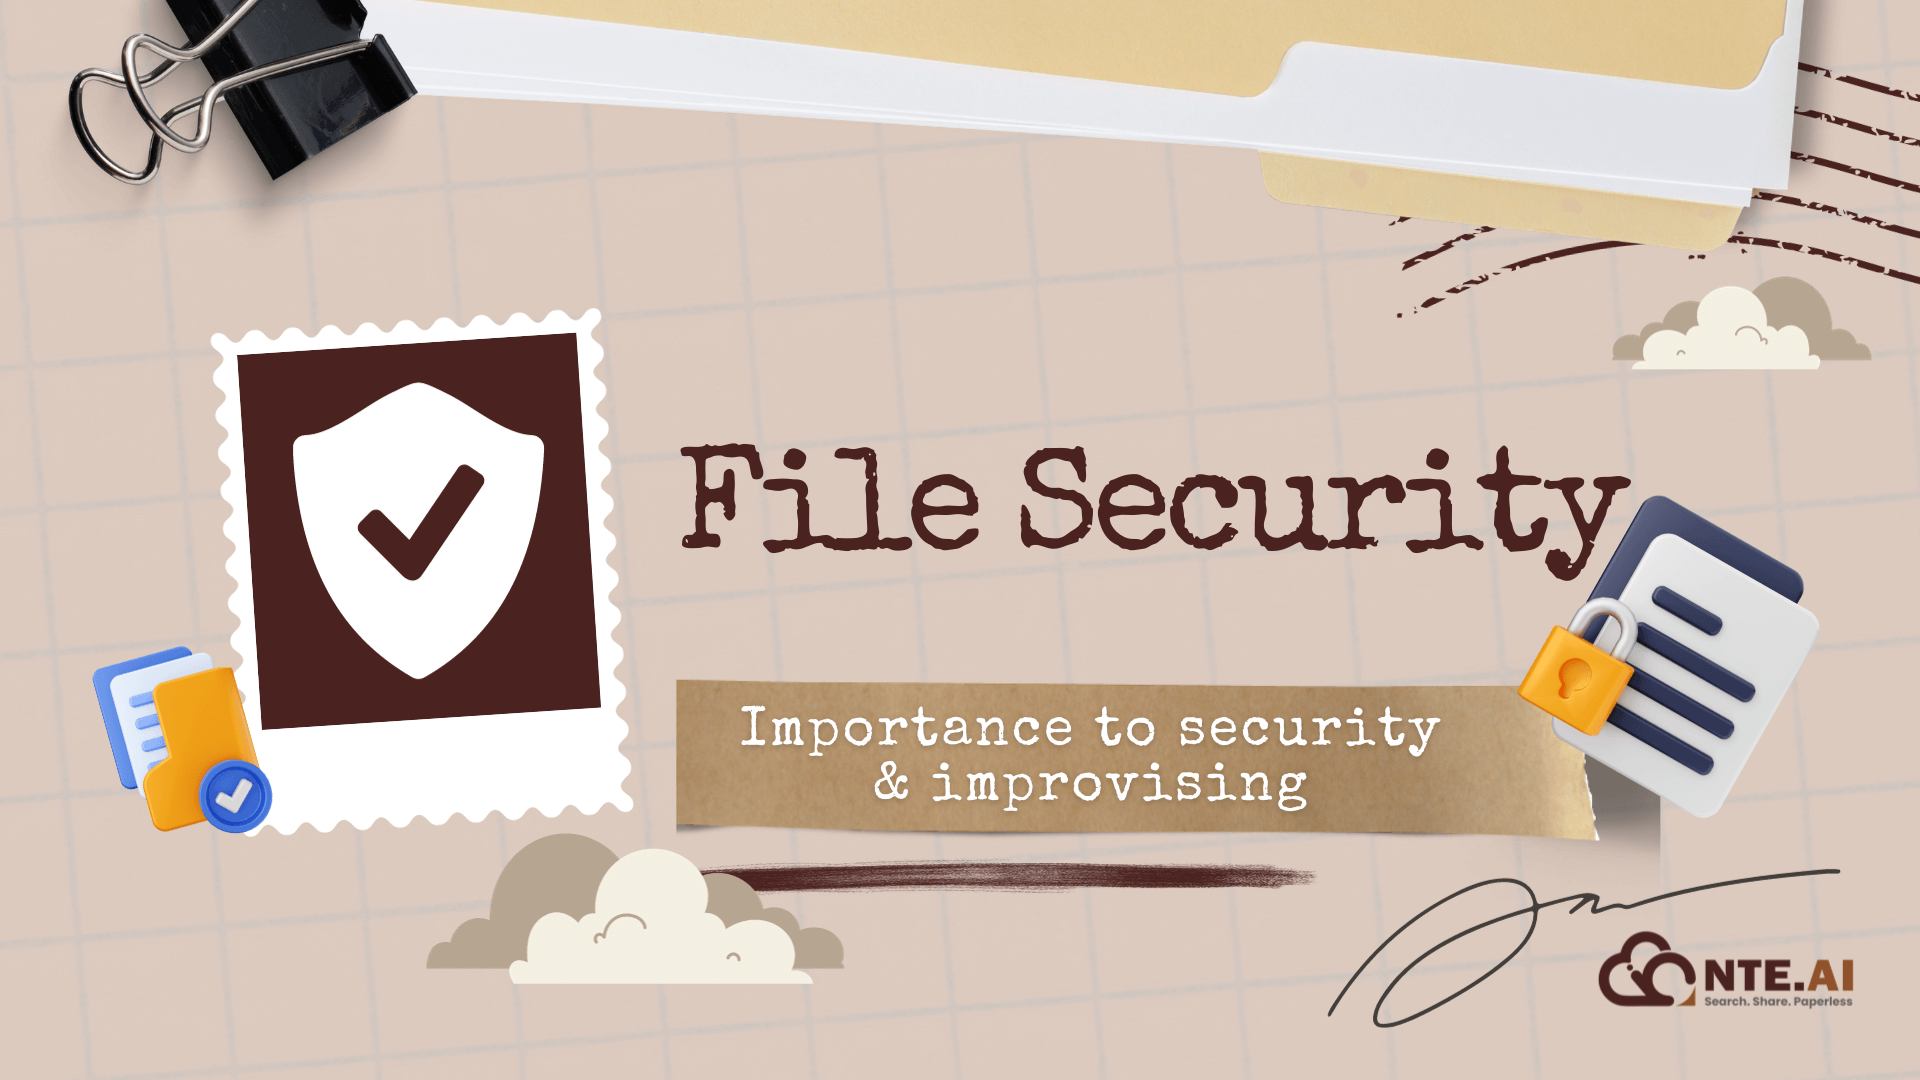 NTE Vidoes file security